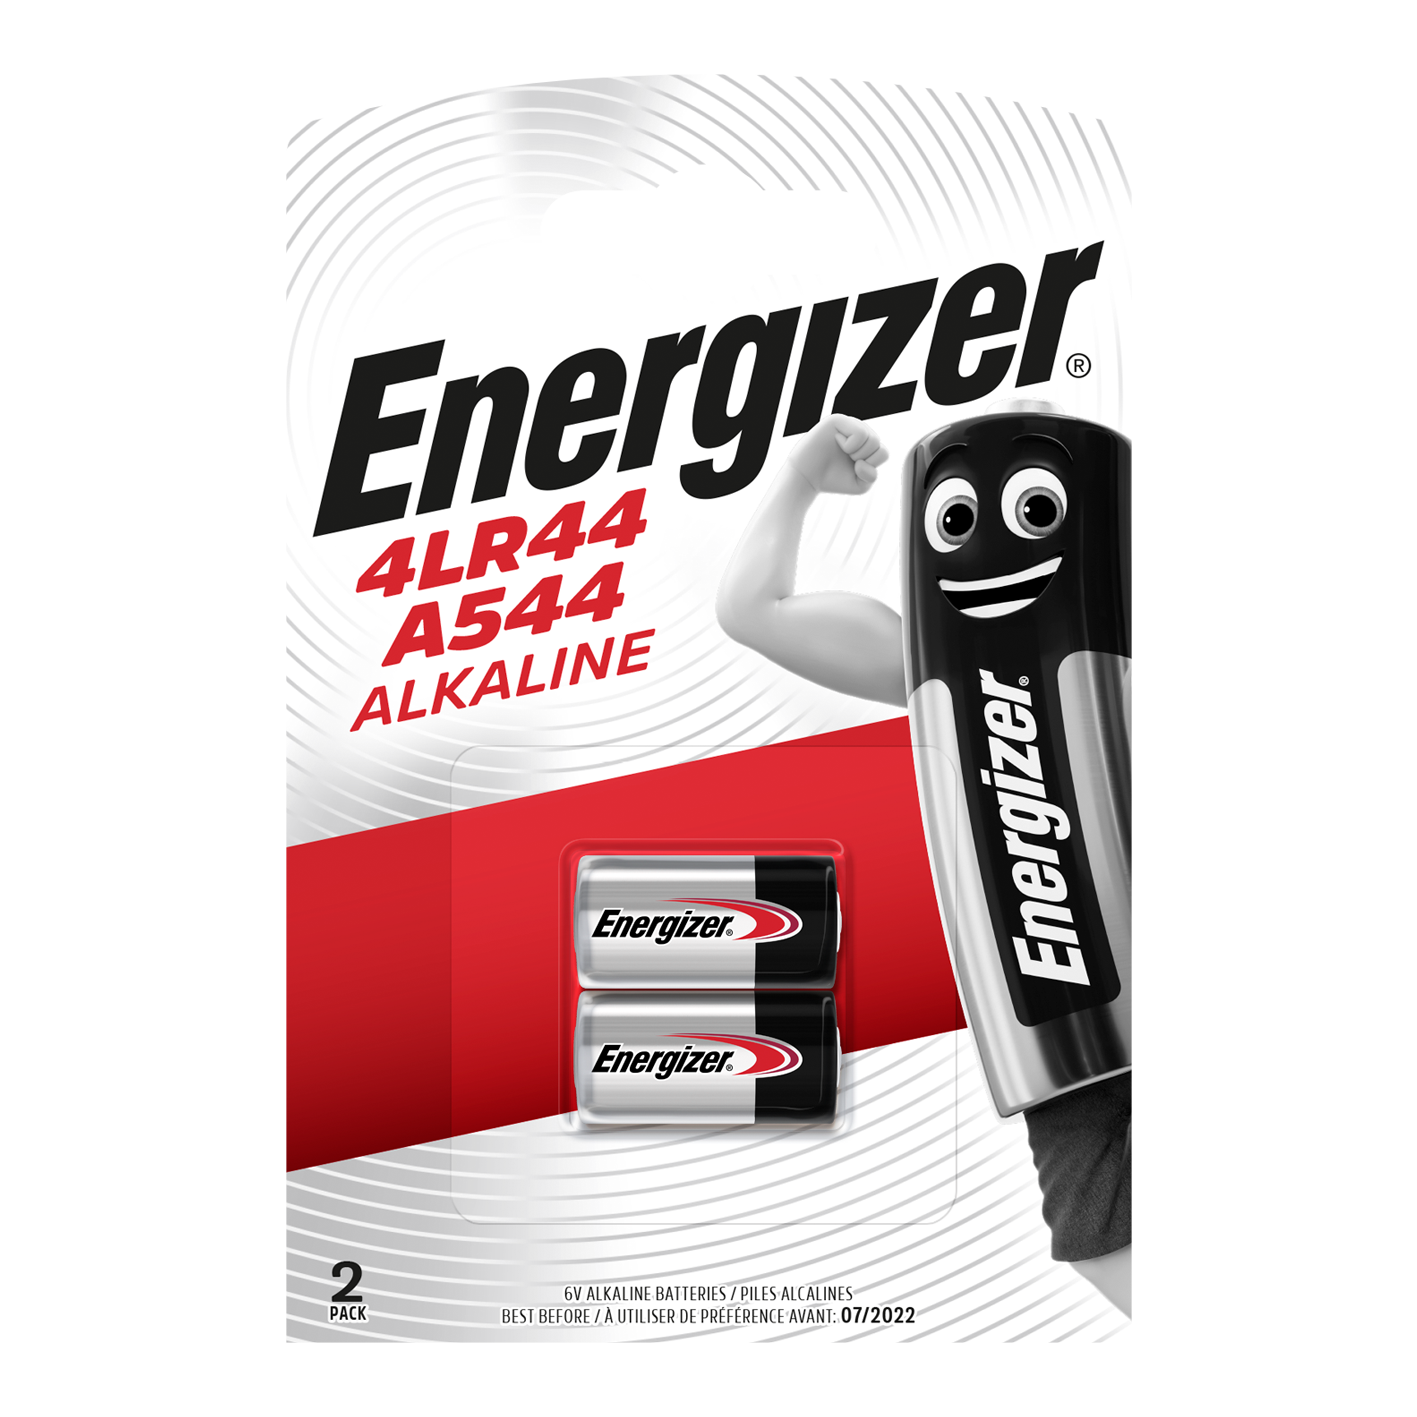 Energizer 4LR44/A544 alcalino, paquete de 2